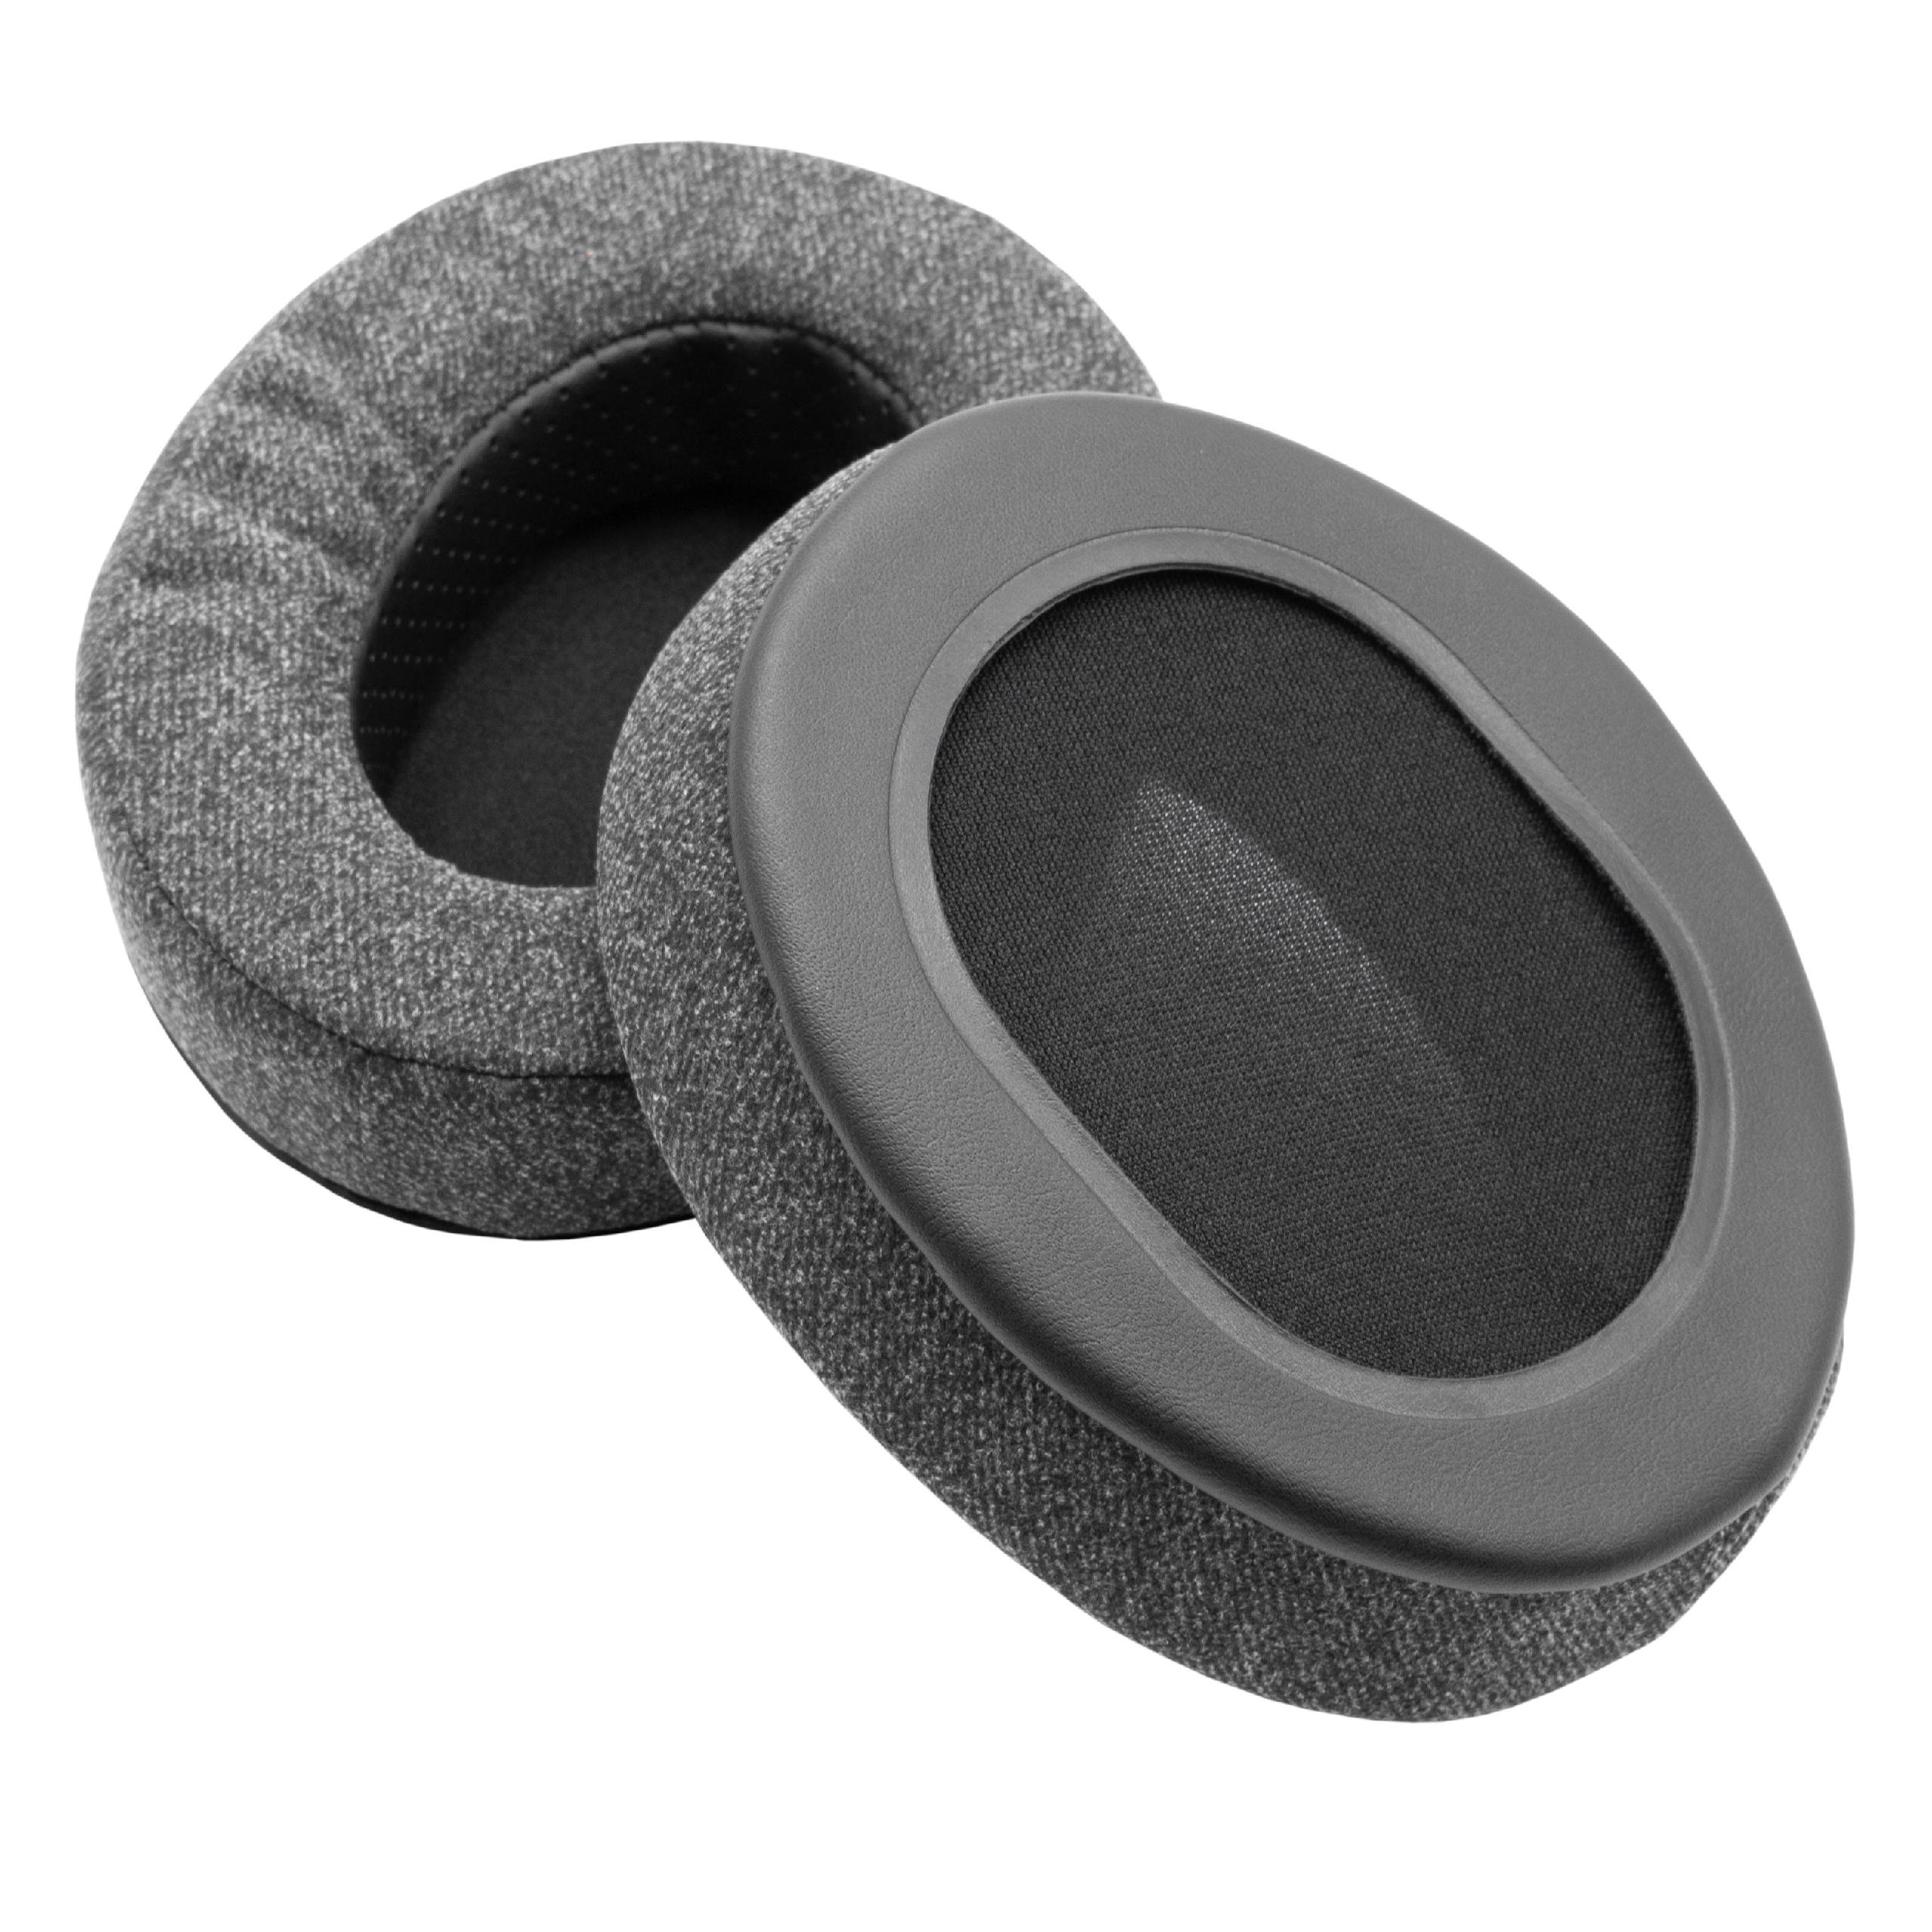 Ear Pads suitable for Roland / Brainwavz RH-300 Headphones etc. - polyurethane / foam, 26 mm thick